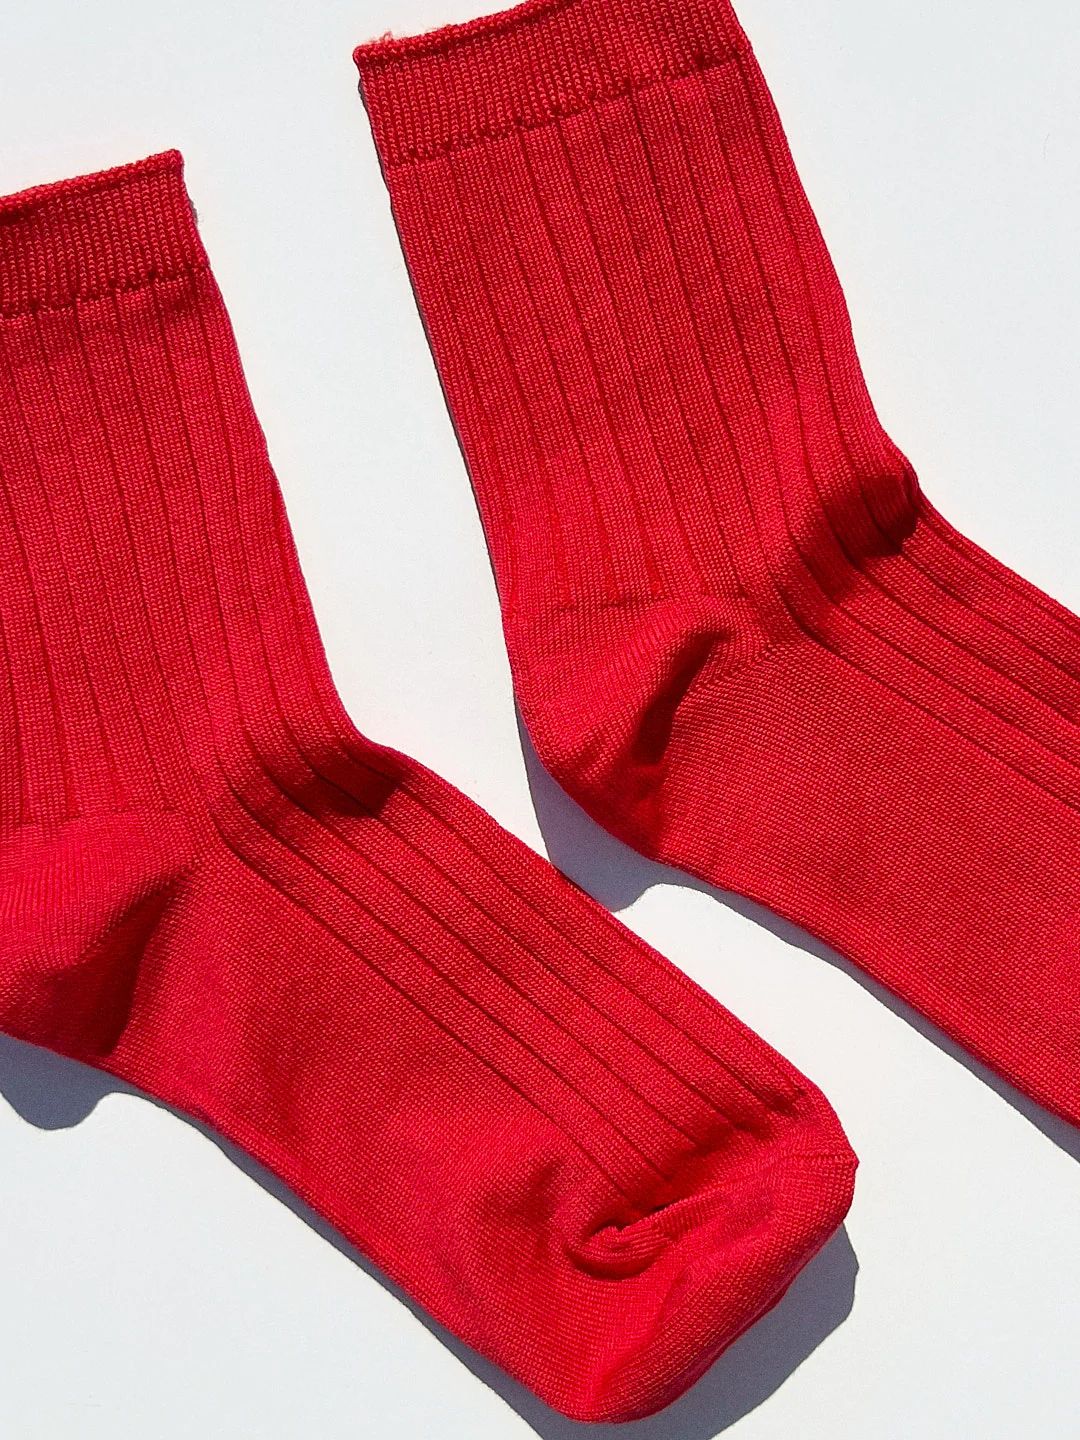 Her Socks - Classic Red | Lisa Says Gah